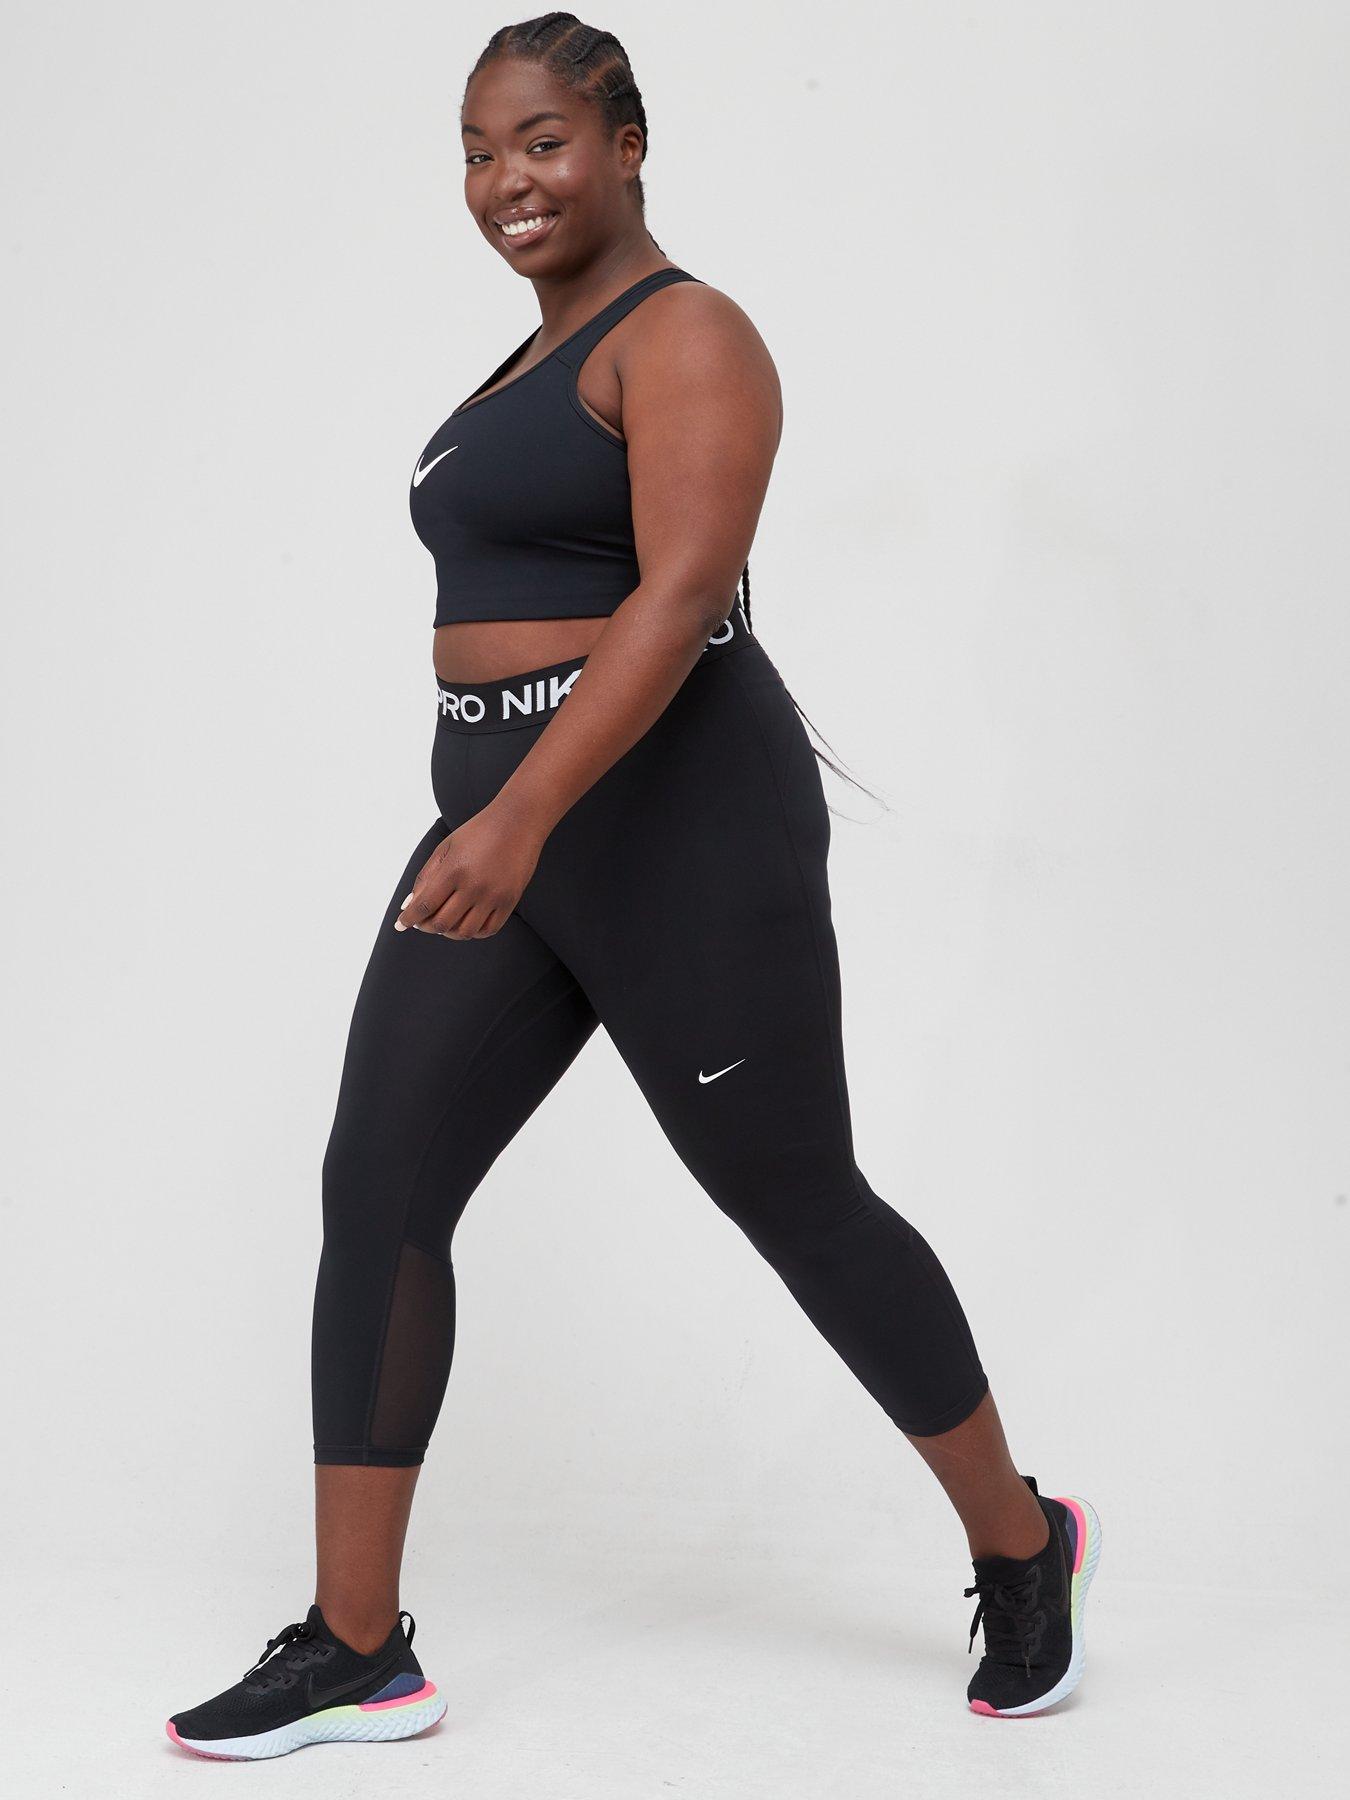 Under Armour Black Womens Size XS Leggings – Twice As Nice